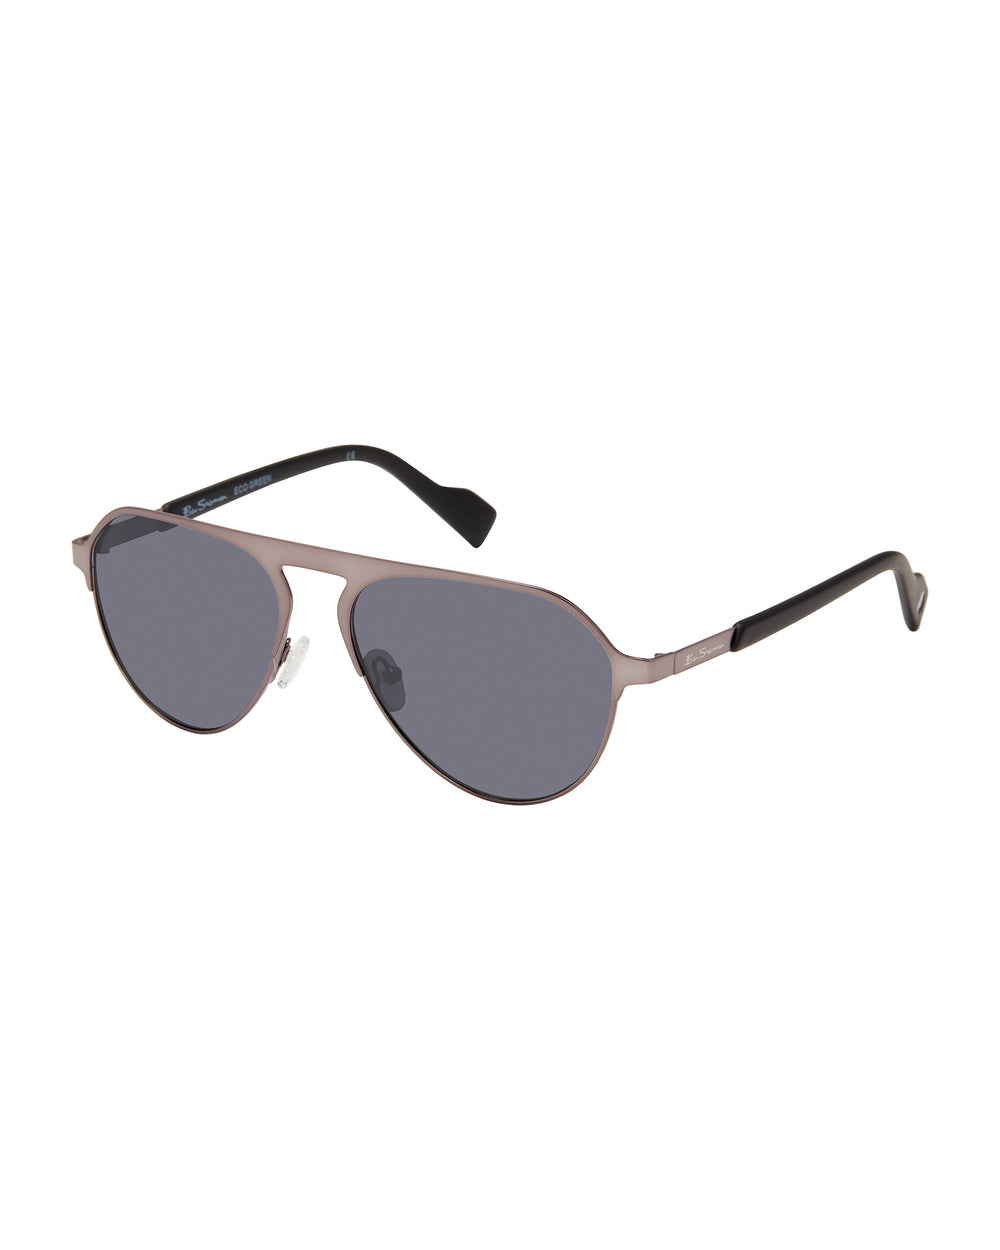 Fred Eco-Green Sunglasses - Matte Gun/Grey